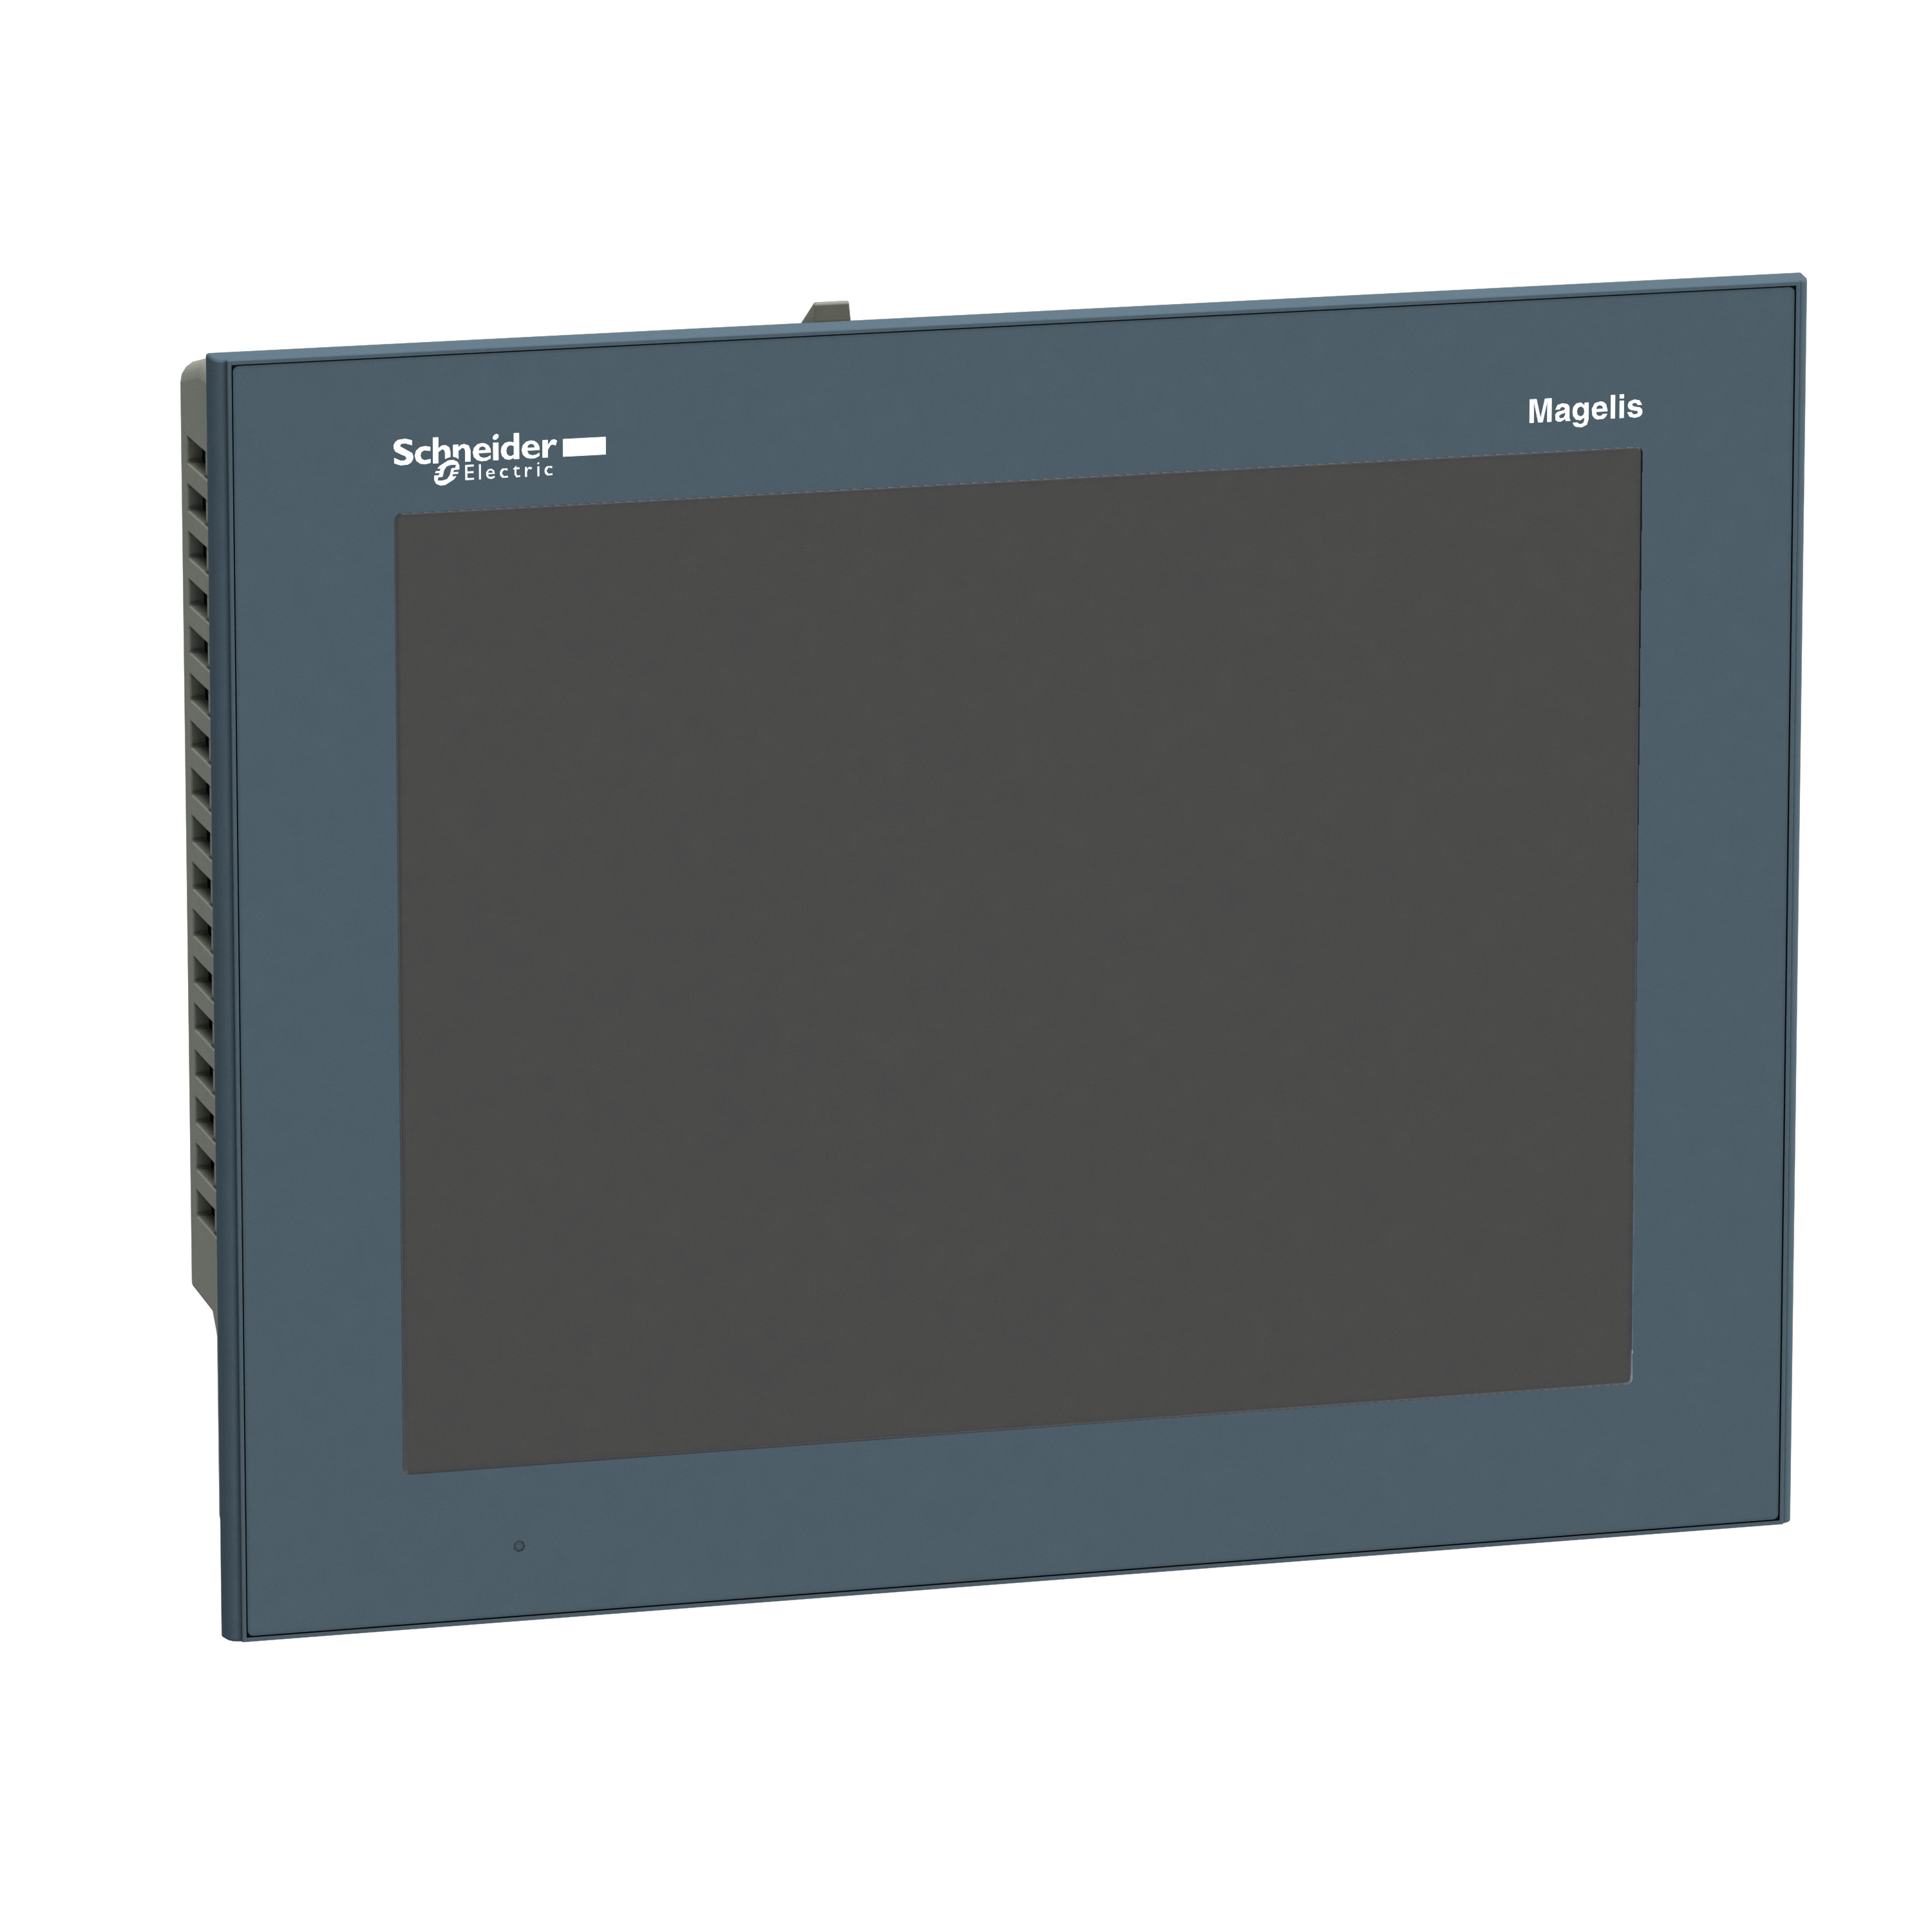 Magelis: napredni touchscreen panel 640 x 480 piksela, VGA, 10.4", TFT, 96 MB, 65536 boja